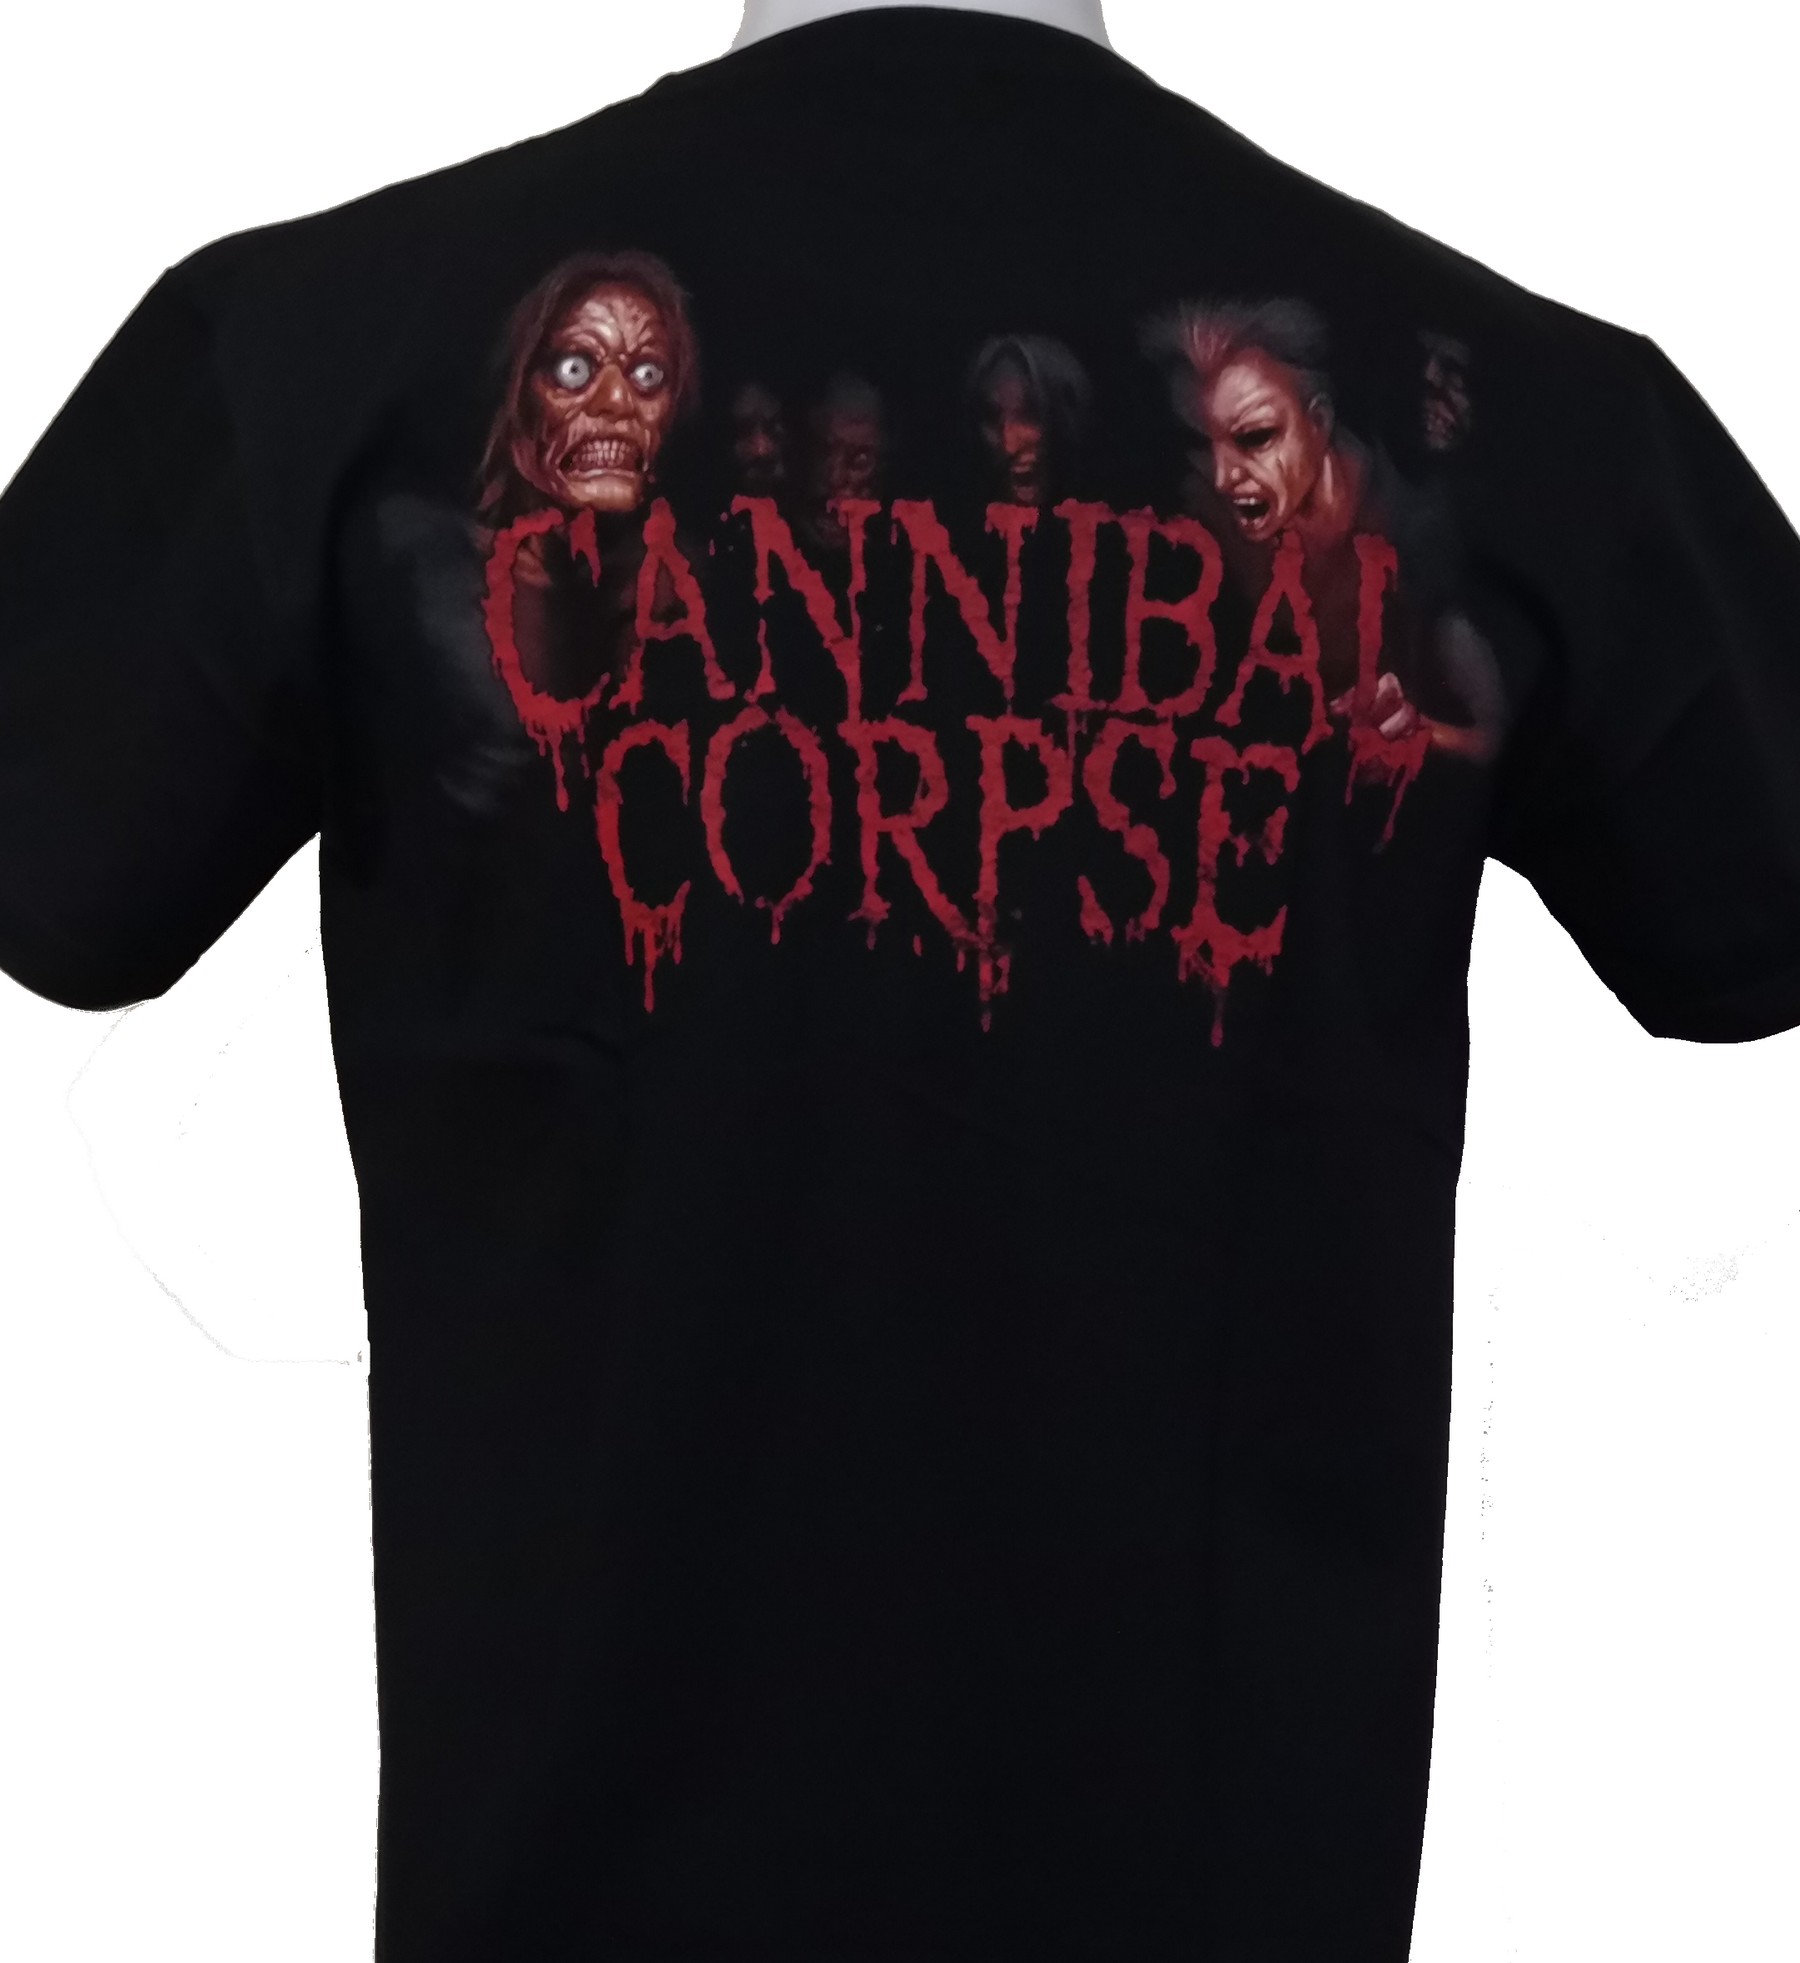 Cannibal corpse песни. Елскул Cannibal Corpse. Футболка Cannibal Corpse the Bleeding.